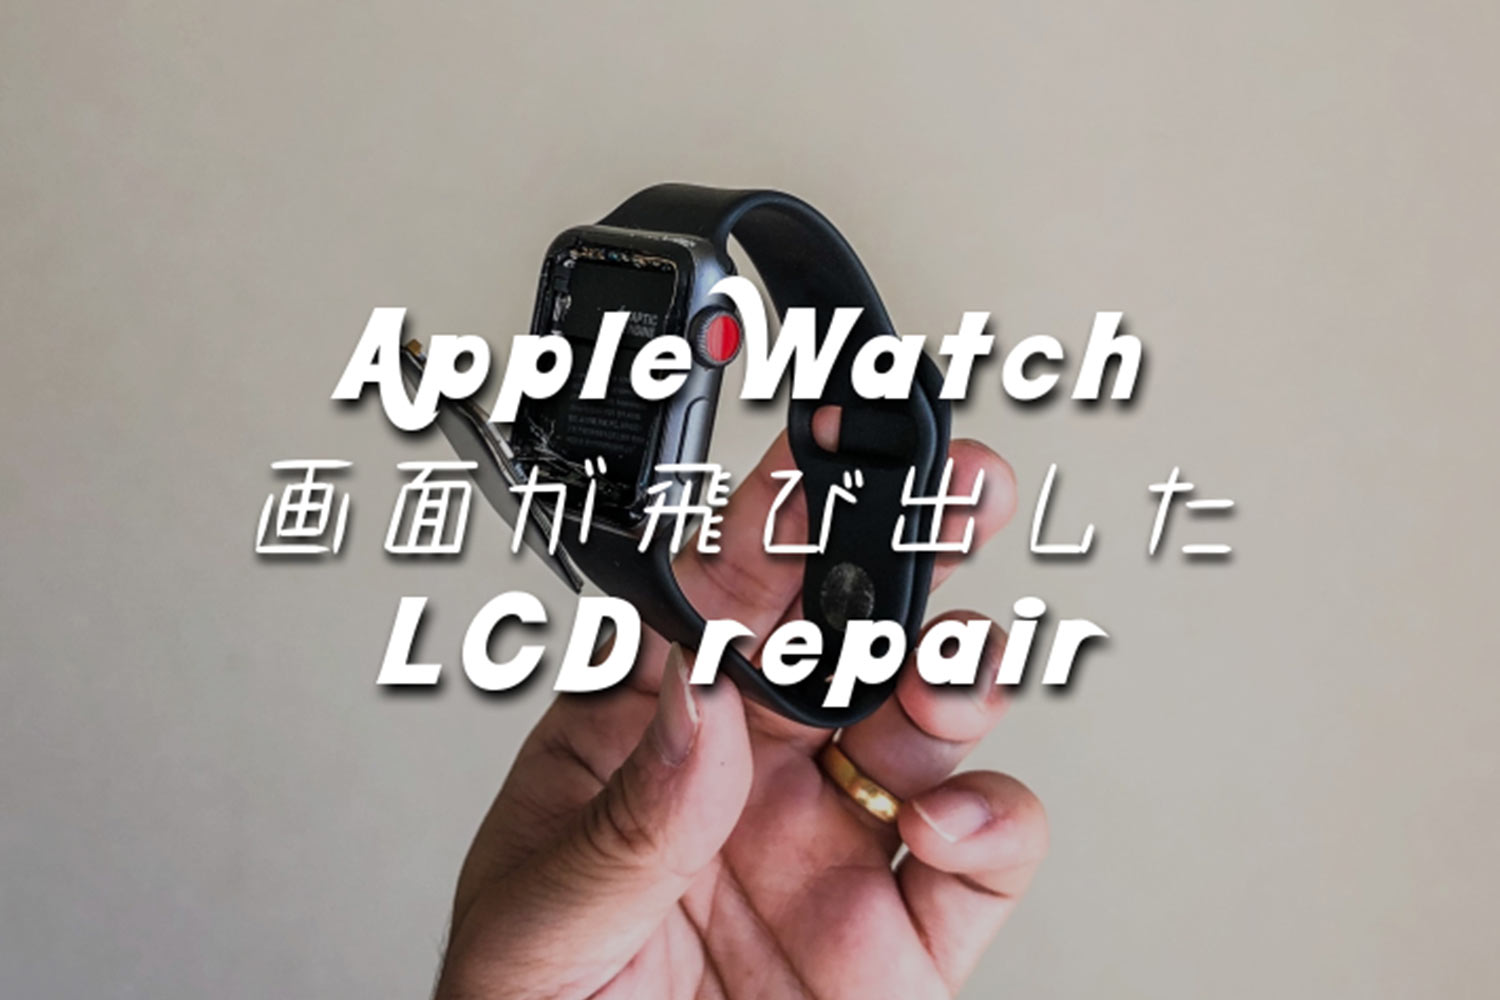 Apple Watch LCD repair thumbnail